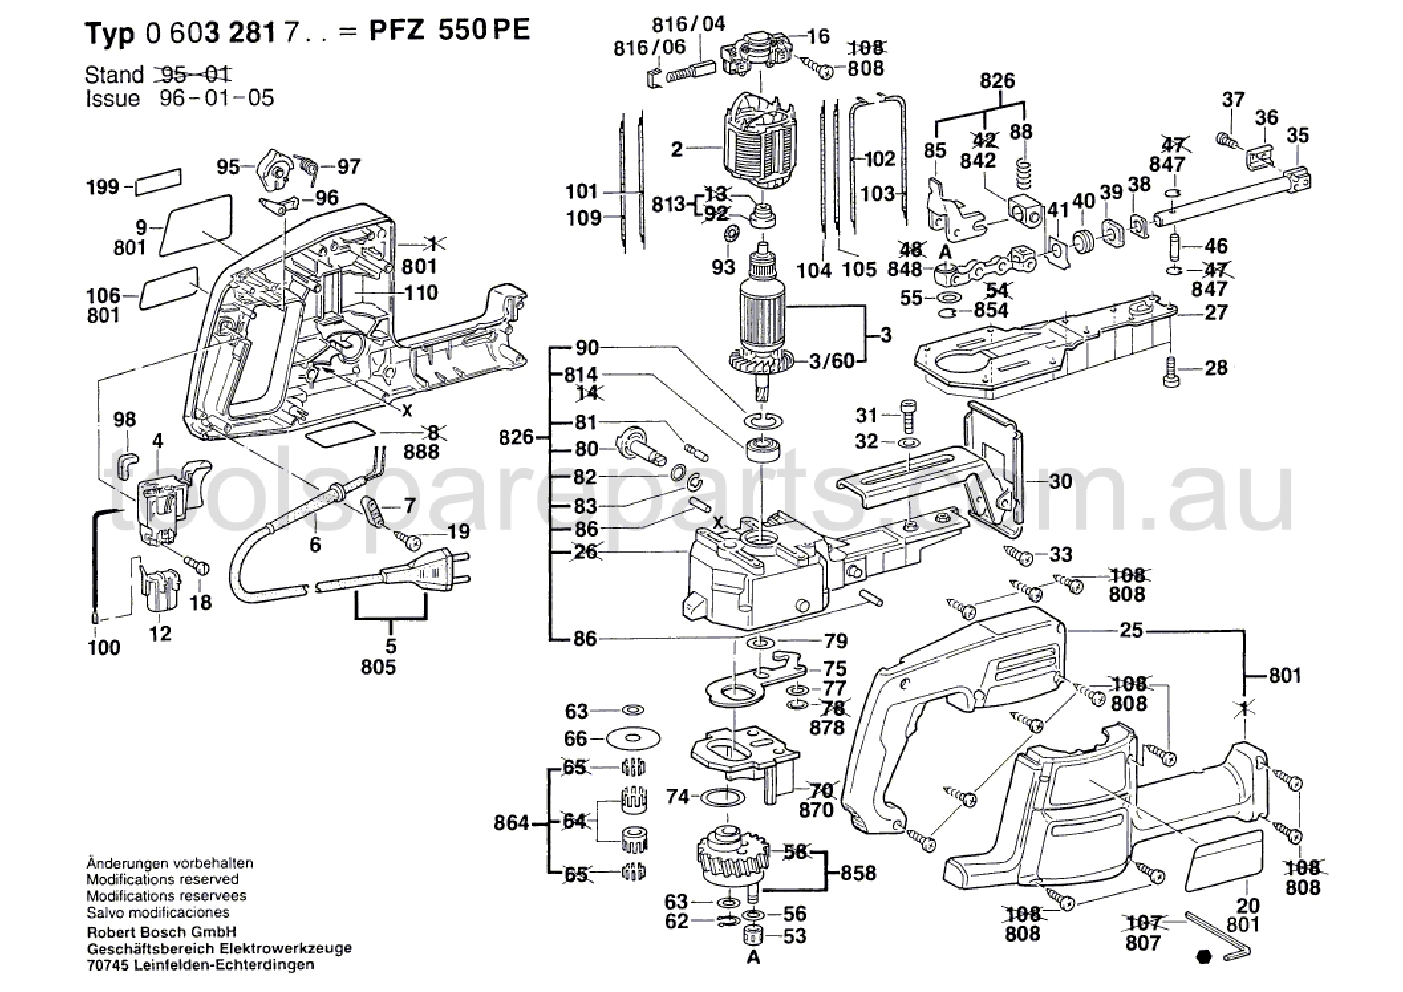 Bosch PFZ 550 PE 0603281737  Diagram 1